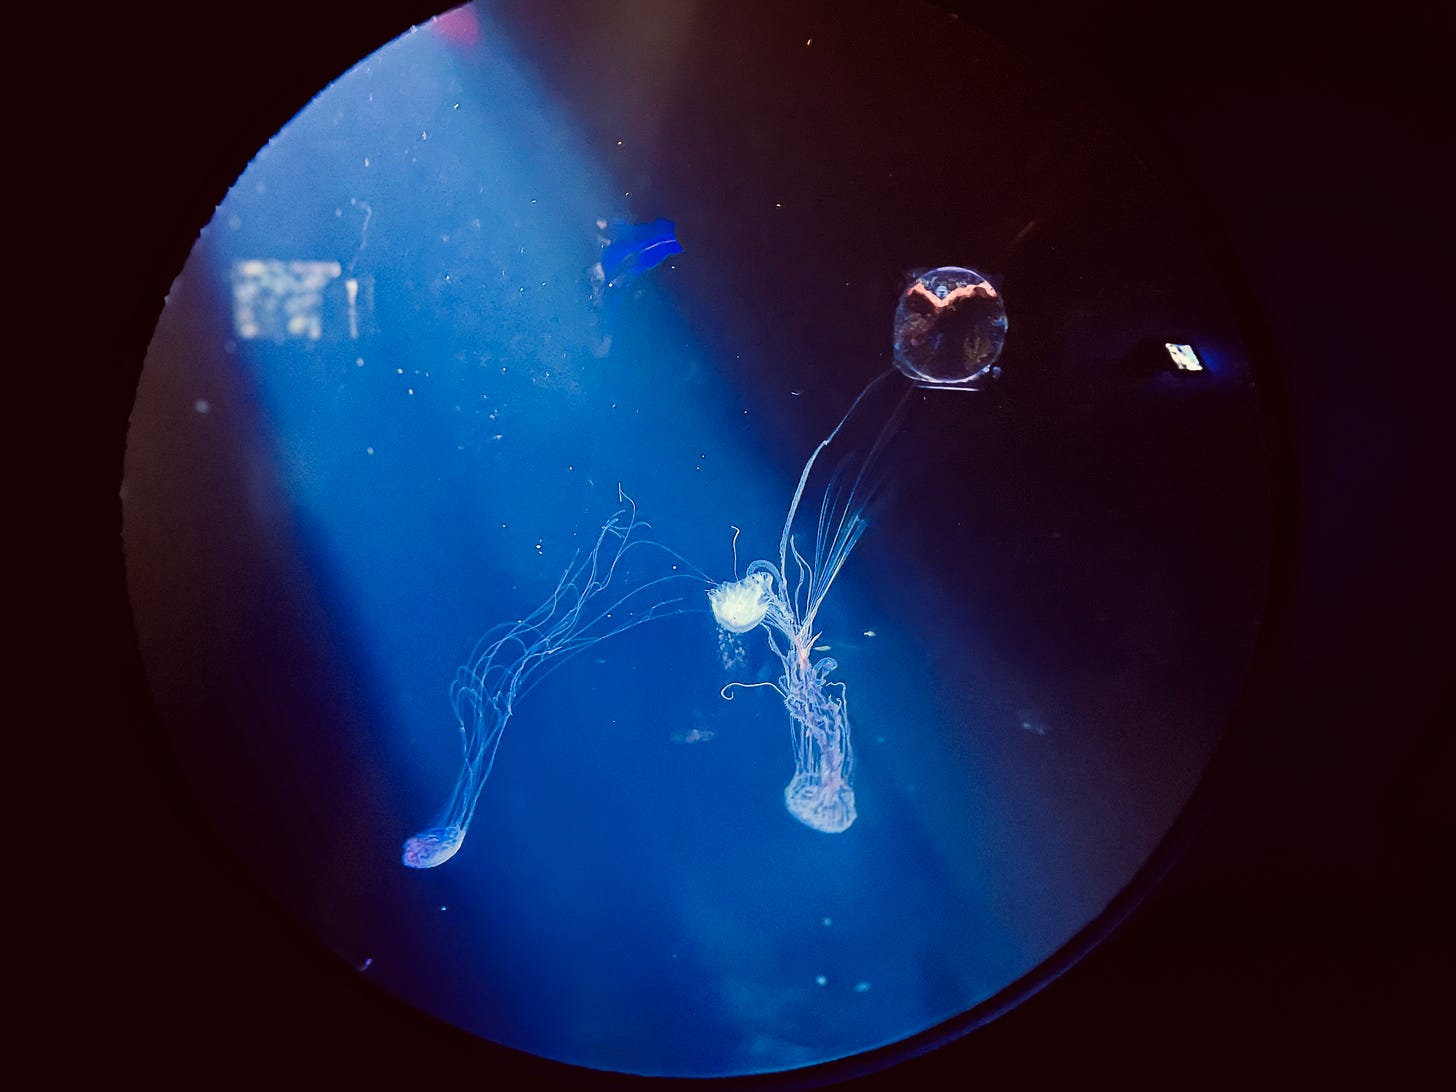 moon jellies in dark water